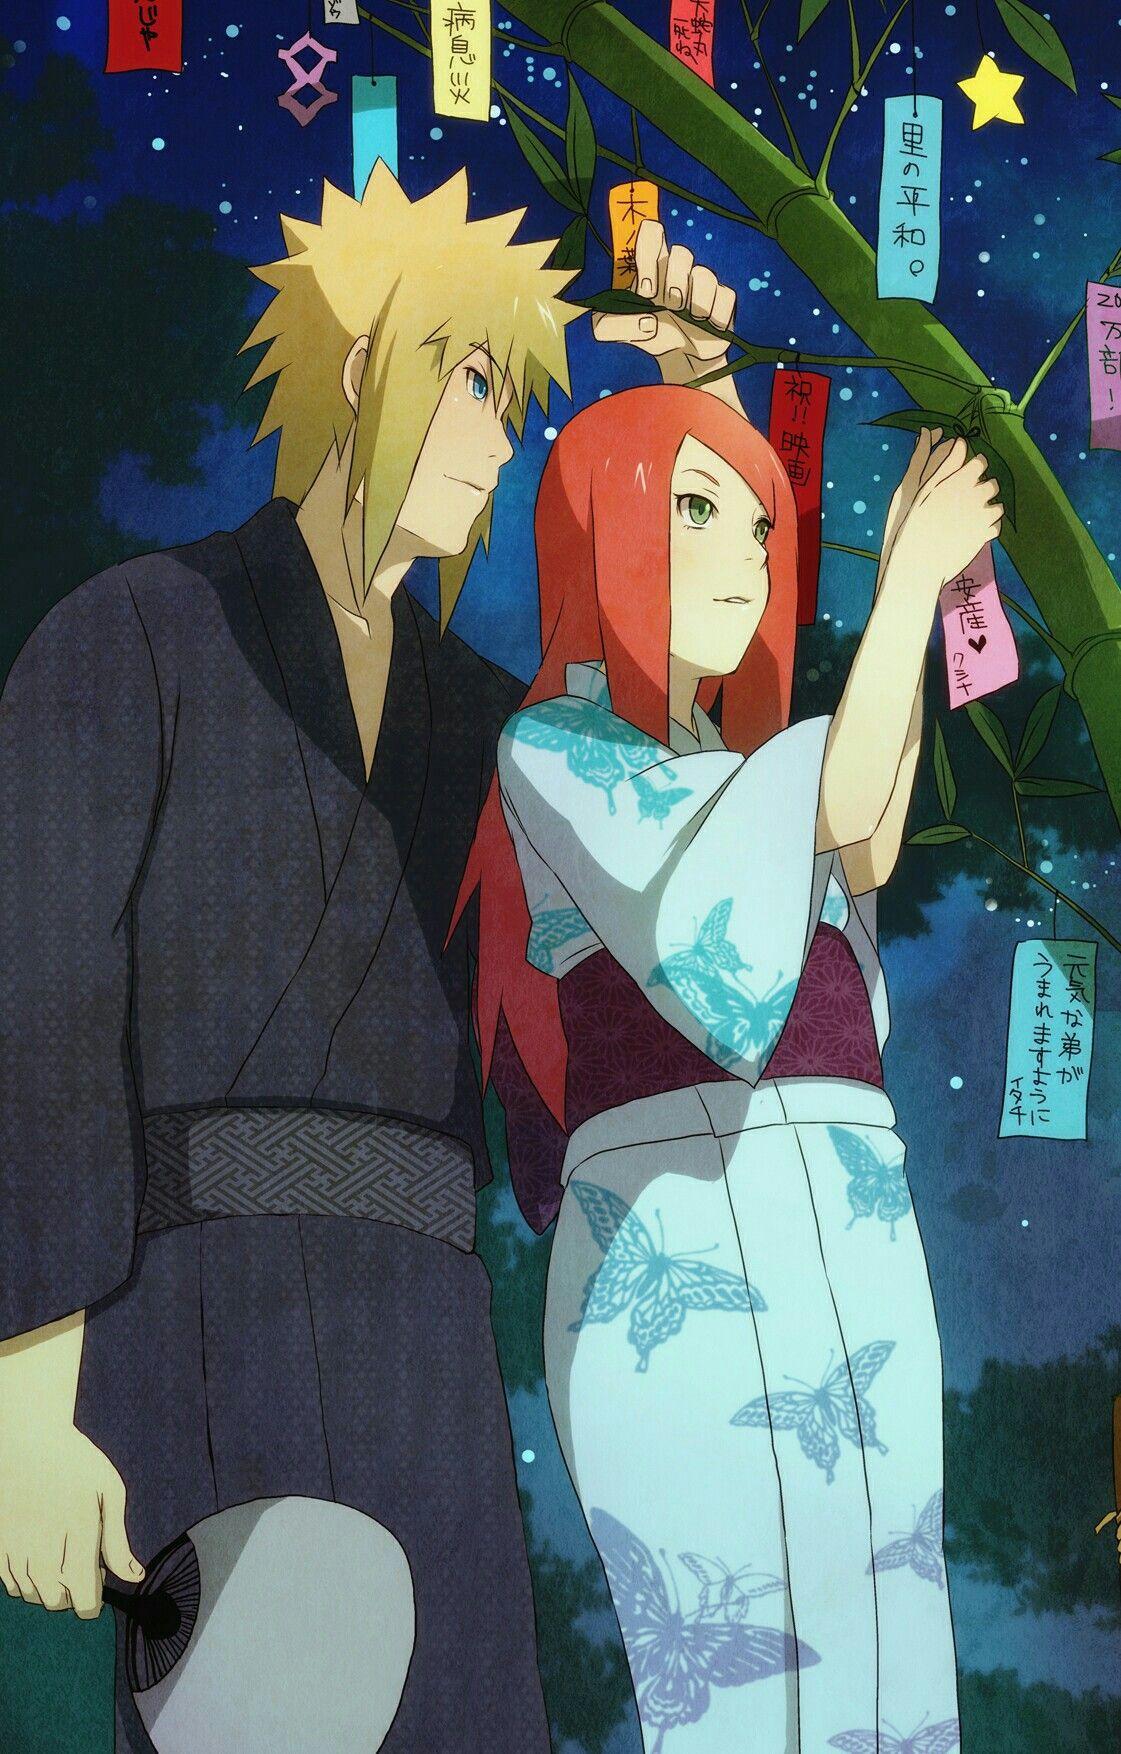 Minato and Kushina; Naruto's mom